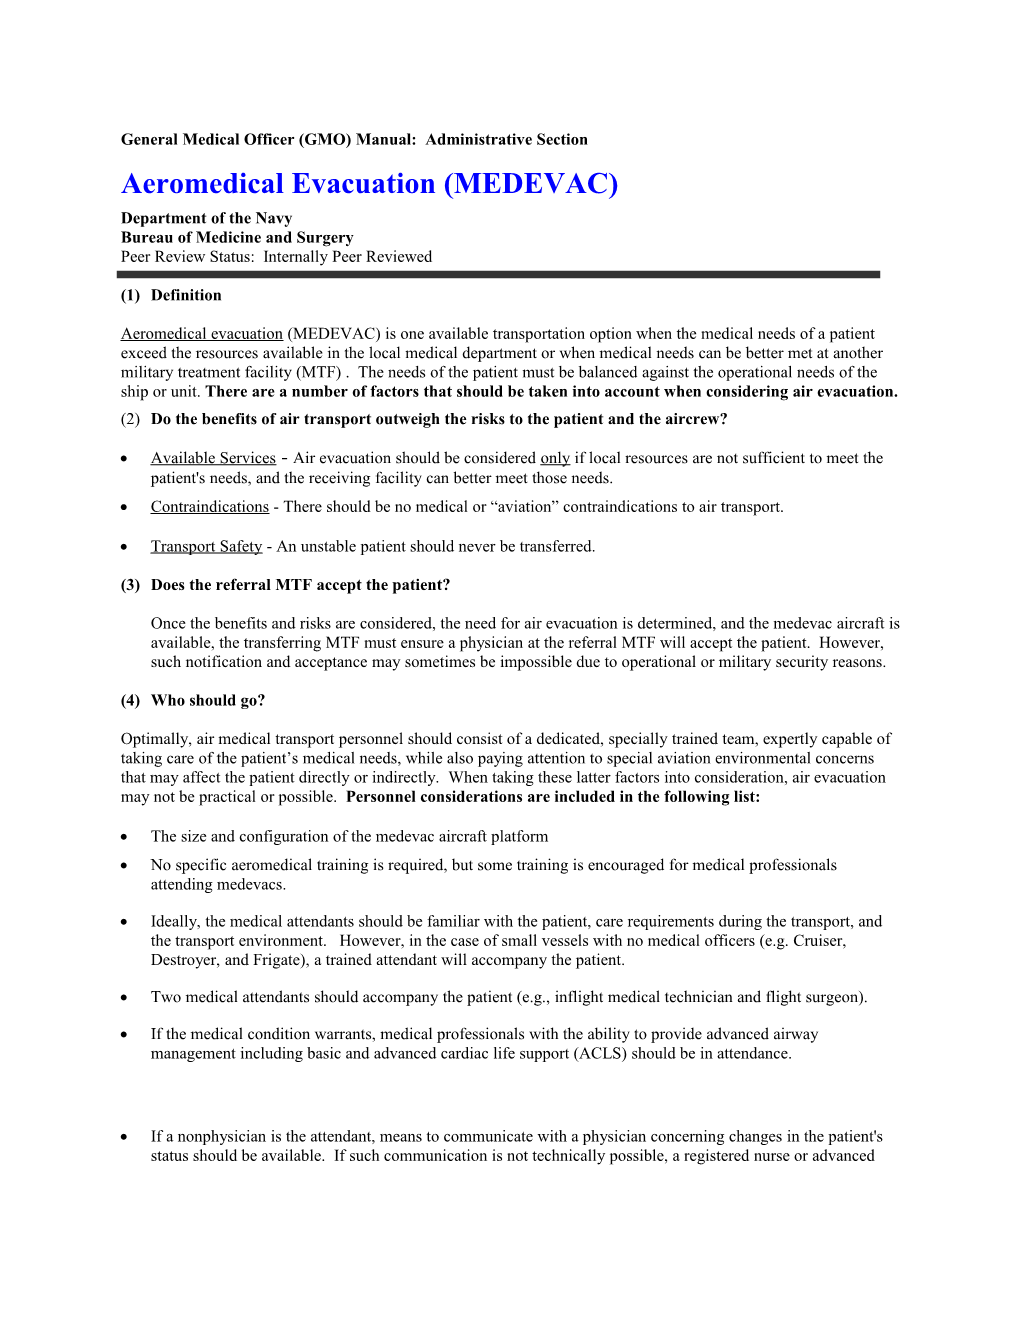 General Medical Officer (GMO) Manual: Aeromedical Evacuation (MEDEVAC)